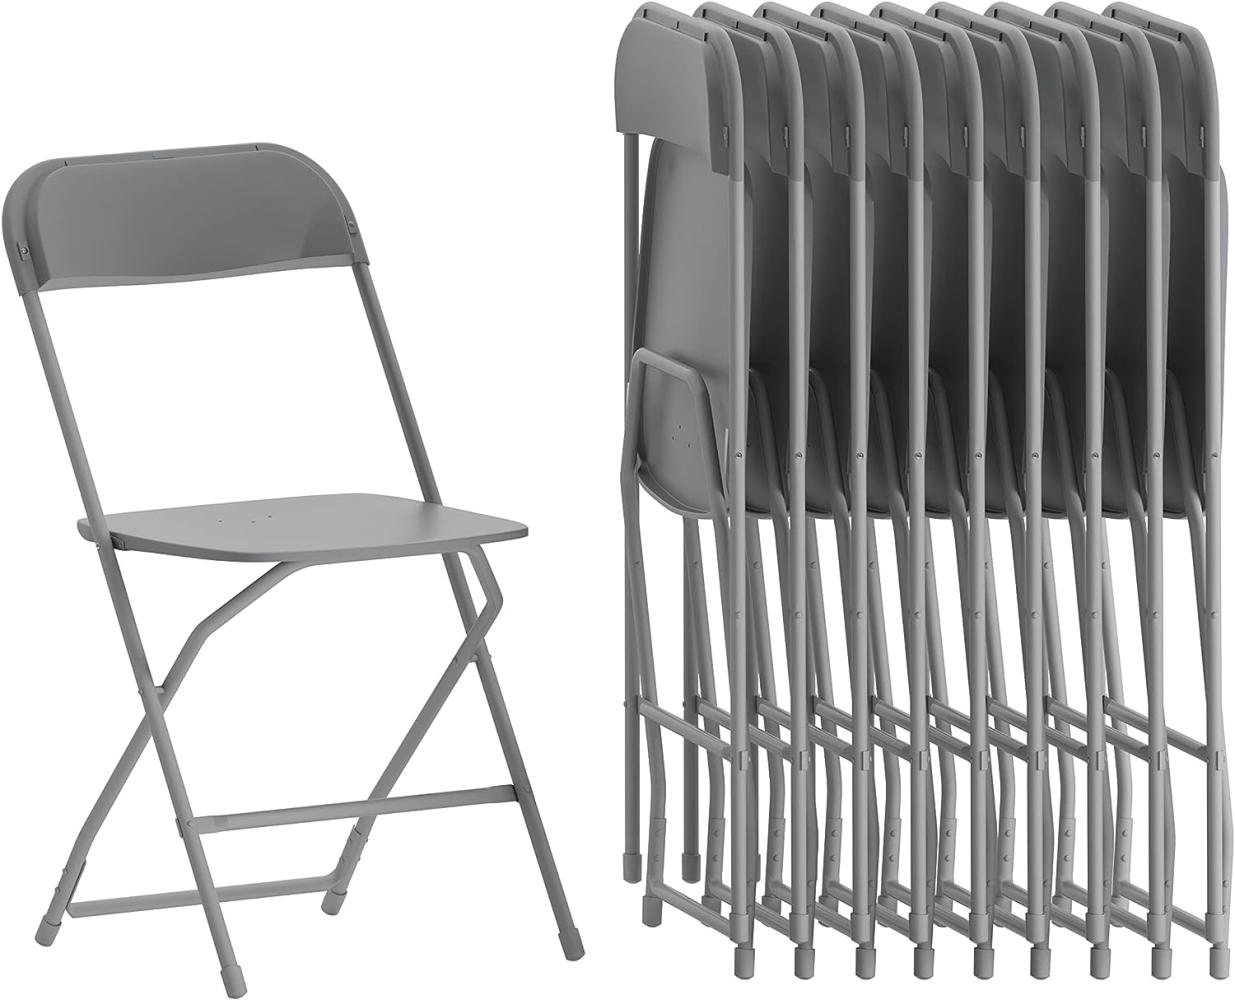 Flash Furniture Klappstuhl, Kunststoff, grau, Set of 10 Bild 1